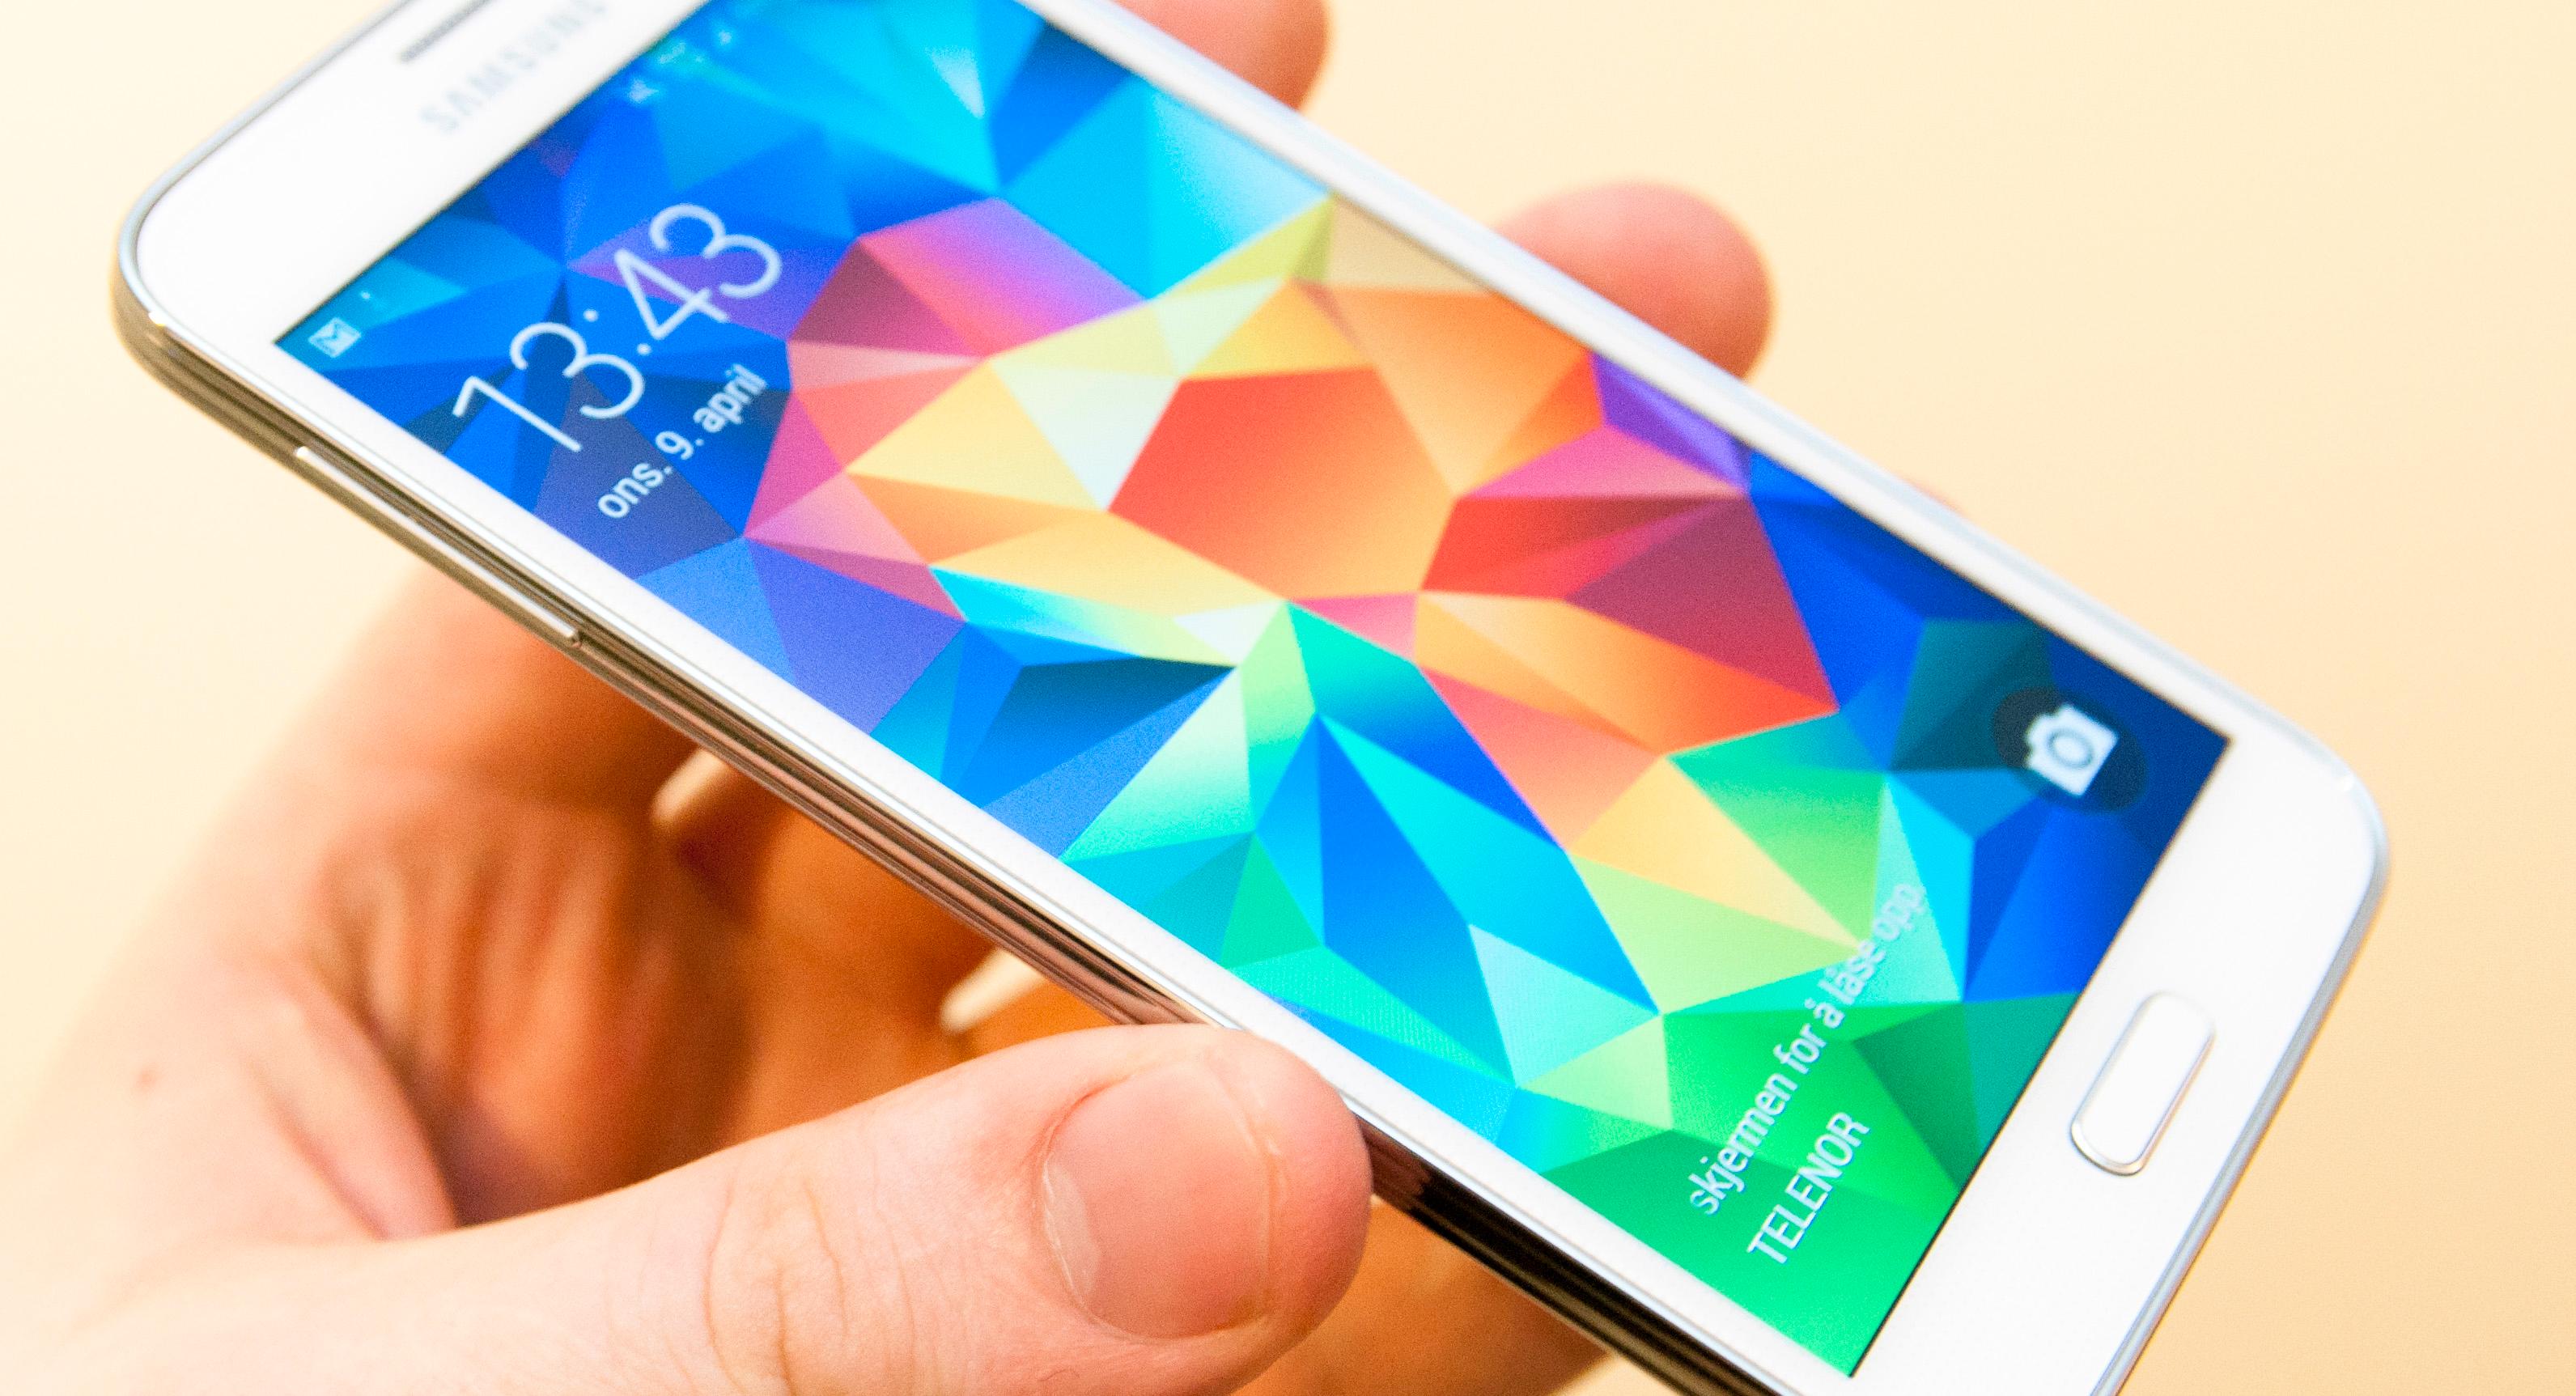 Galaxy S6-detaljene kan ha lekket